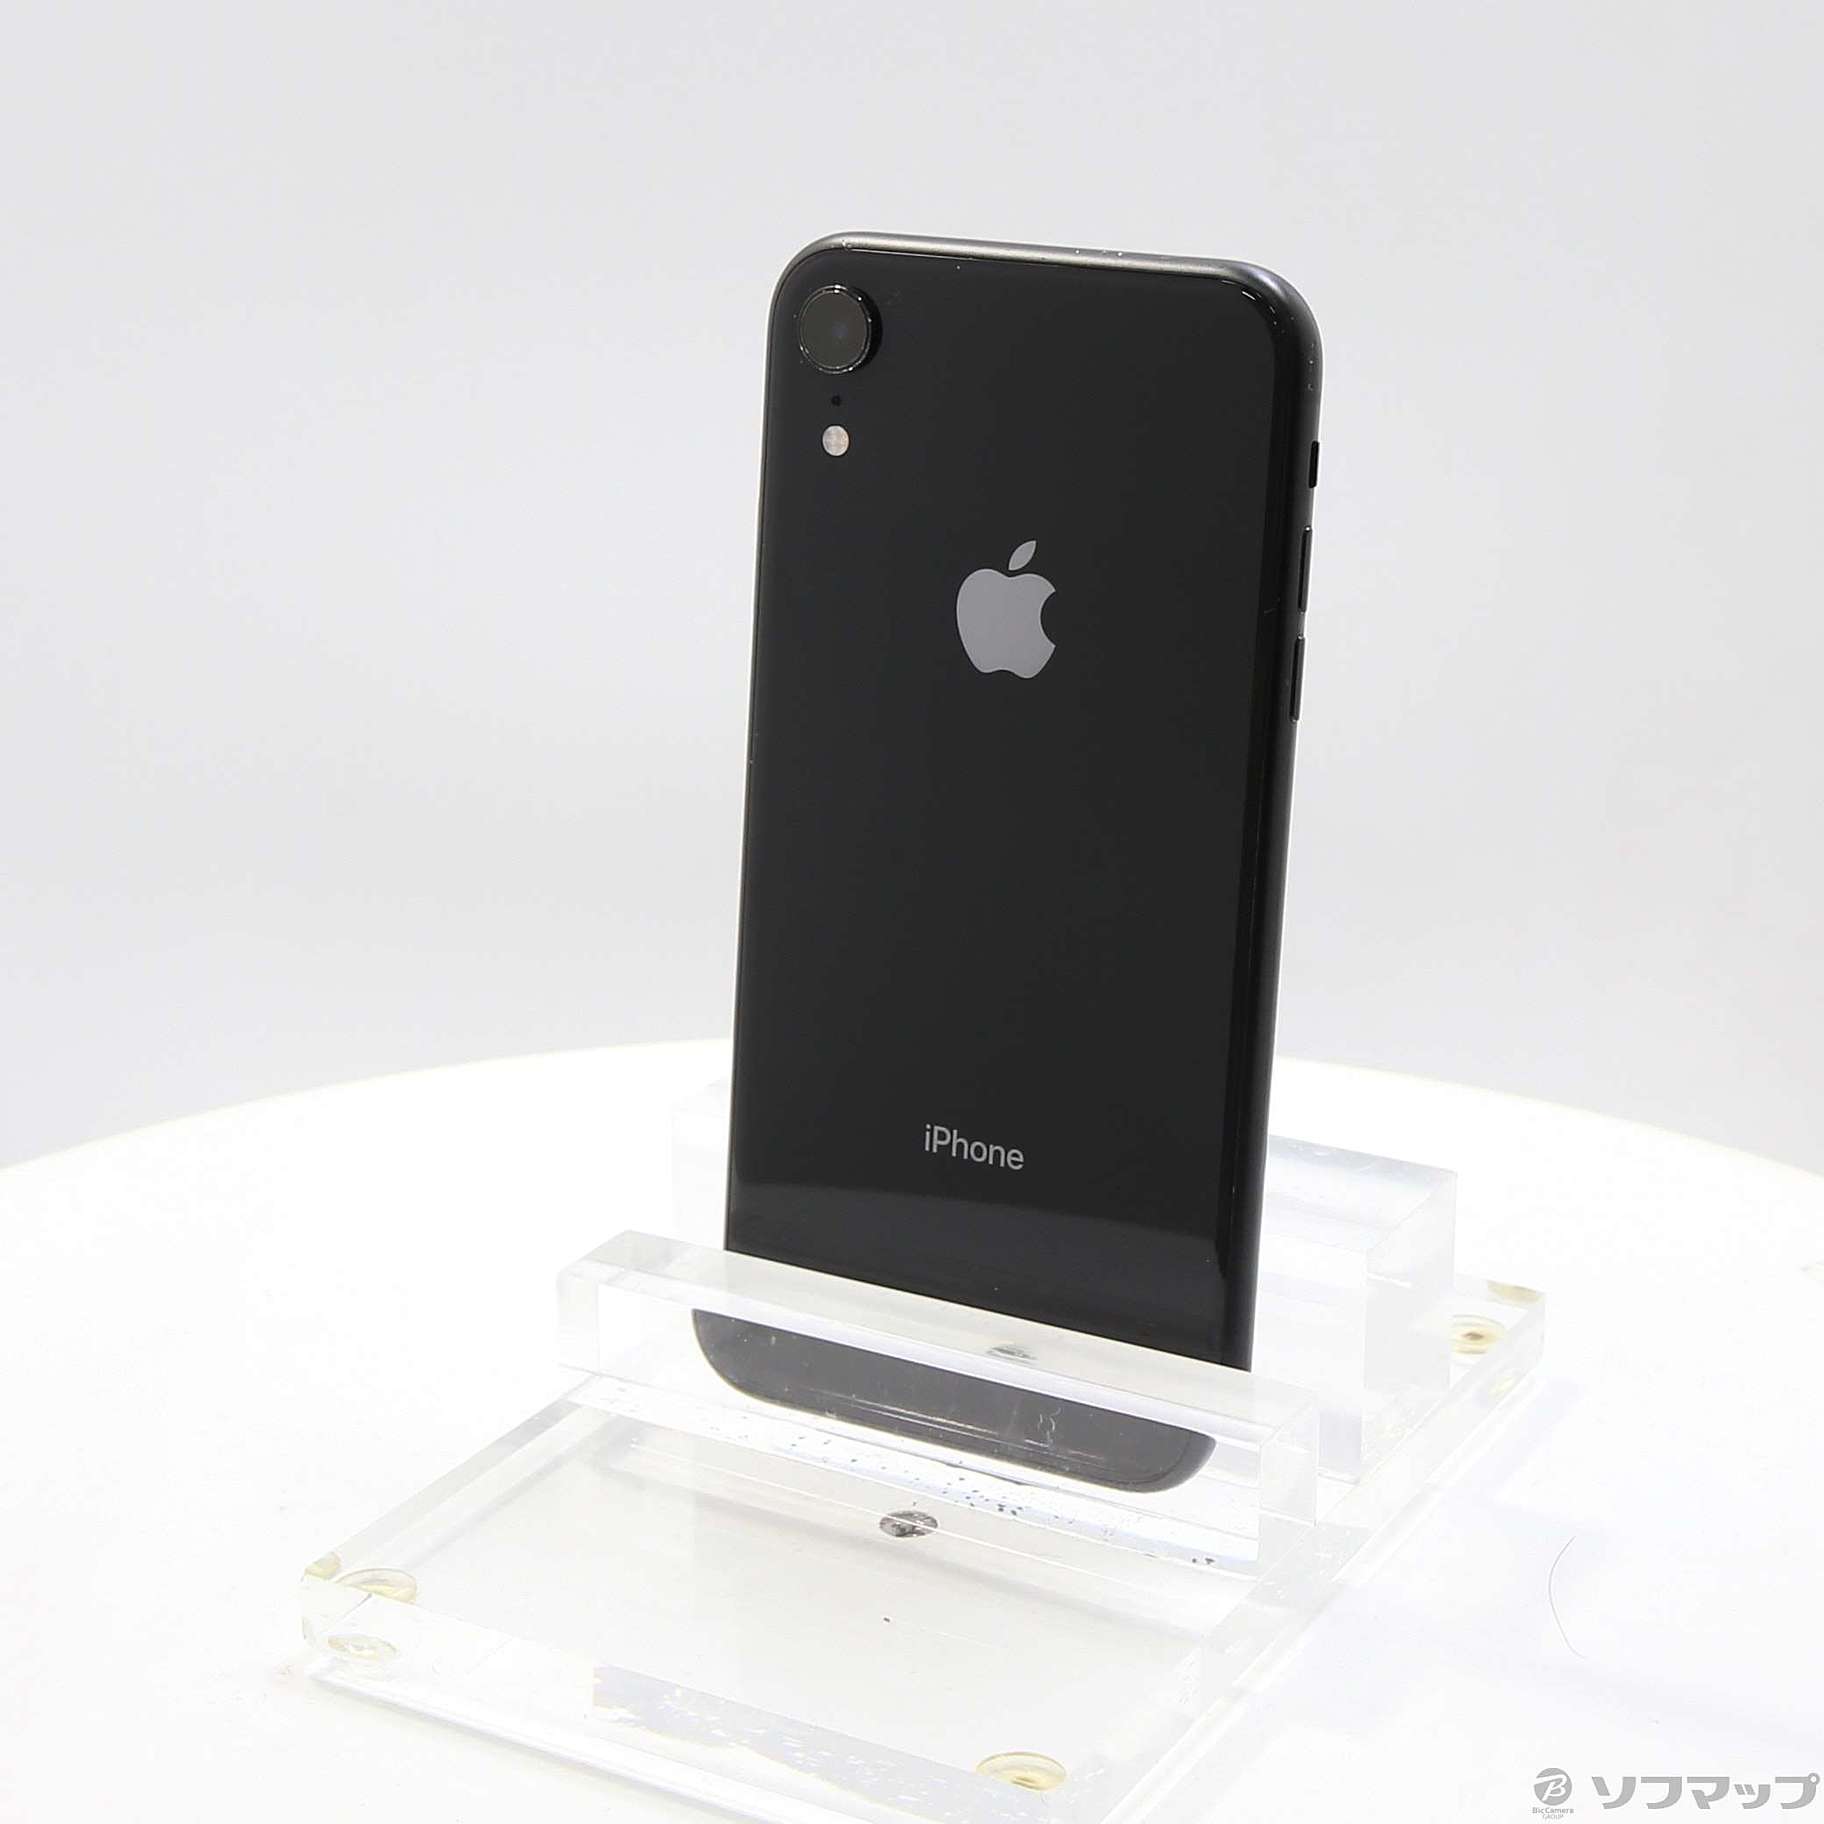 iPhone【新品】iPhoneXR 64GB ブラック【SIMフリー】 - スマートフォン本体